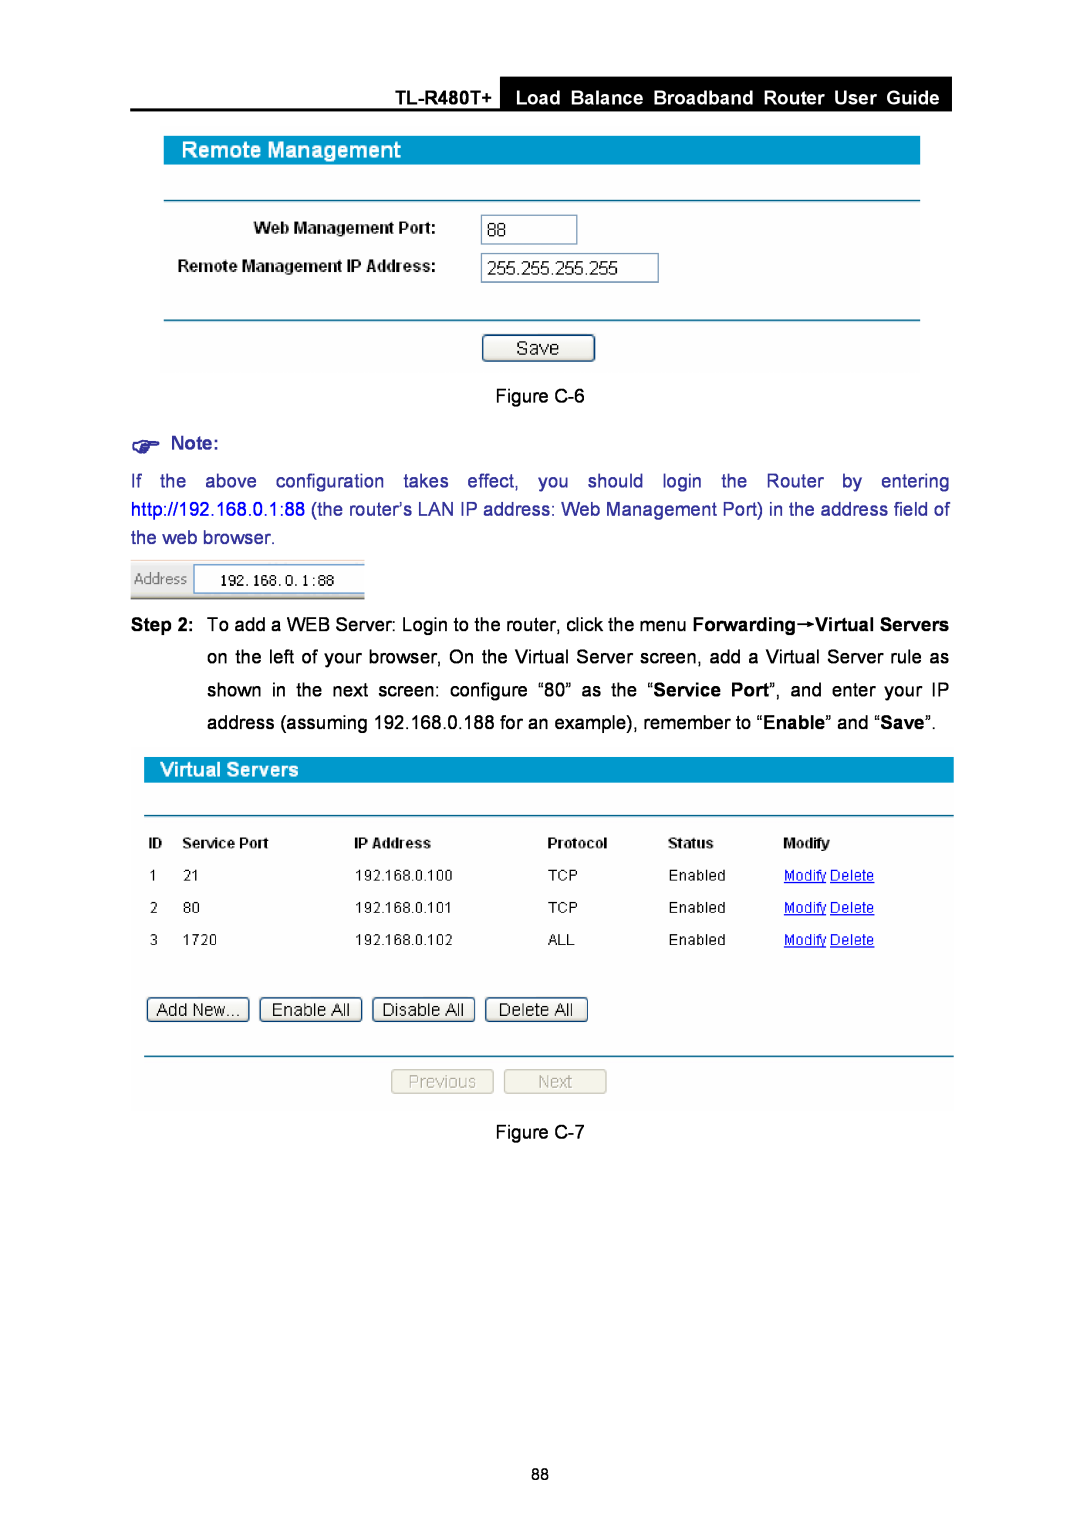 TP-Link TL-R480T+ manual Load Balance Broadband Router User Guide, Figure C-6, Figure C-7 